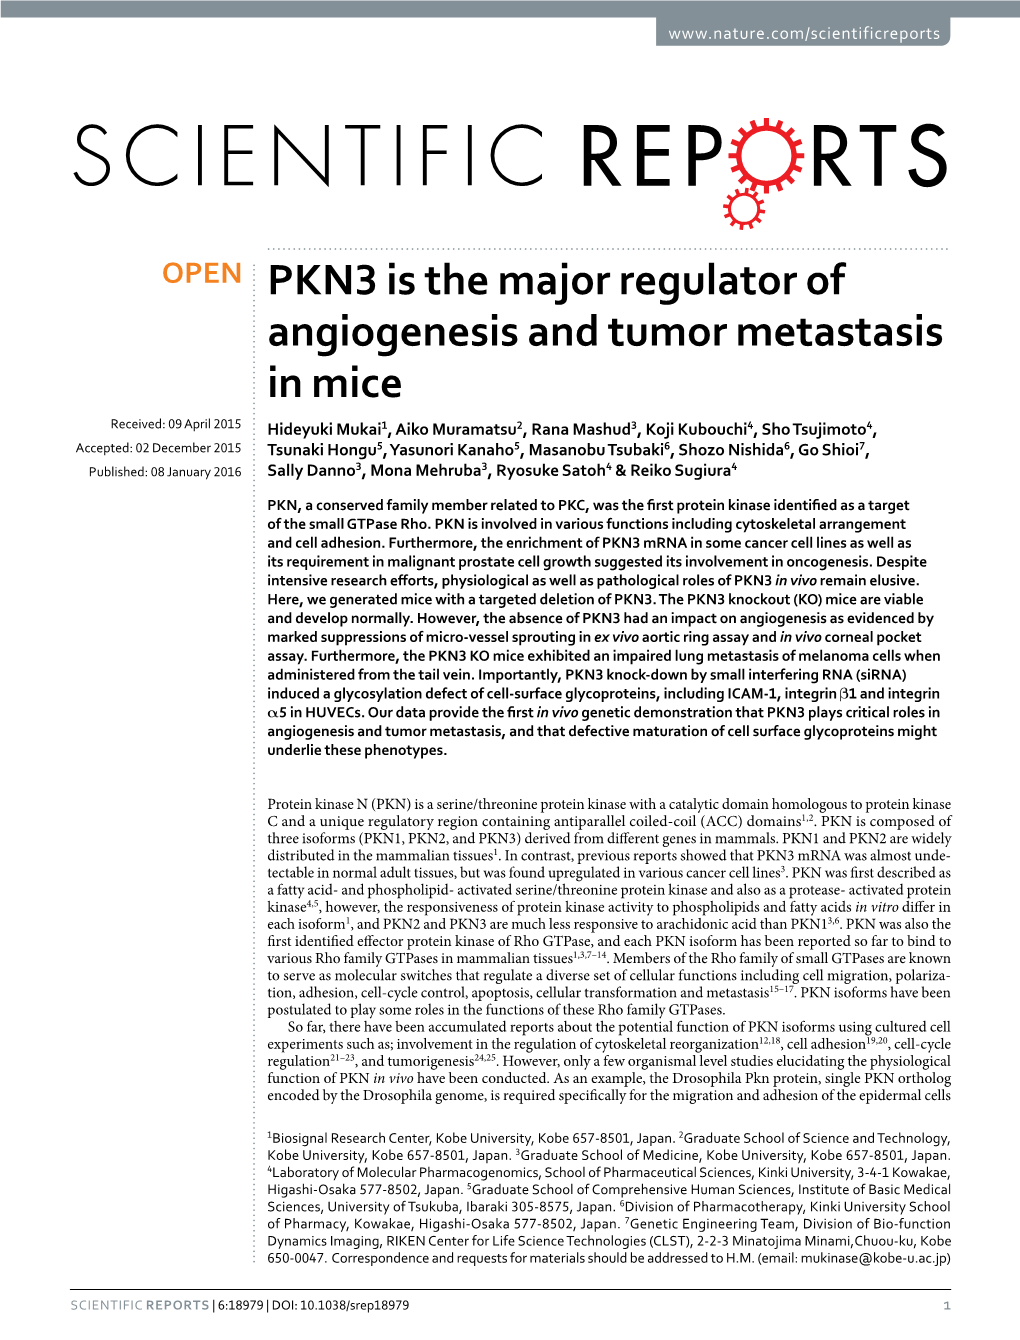 PKN3 Is the Major Regulator of Angiogenesis and Tumor Metastasis